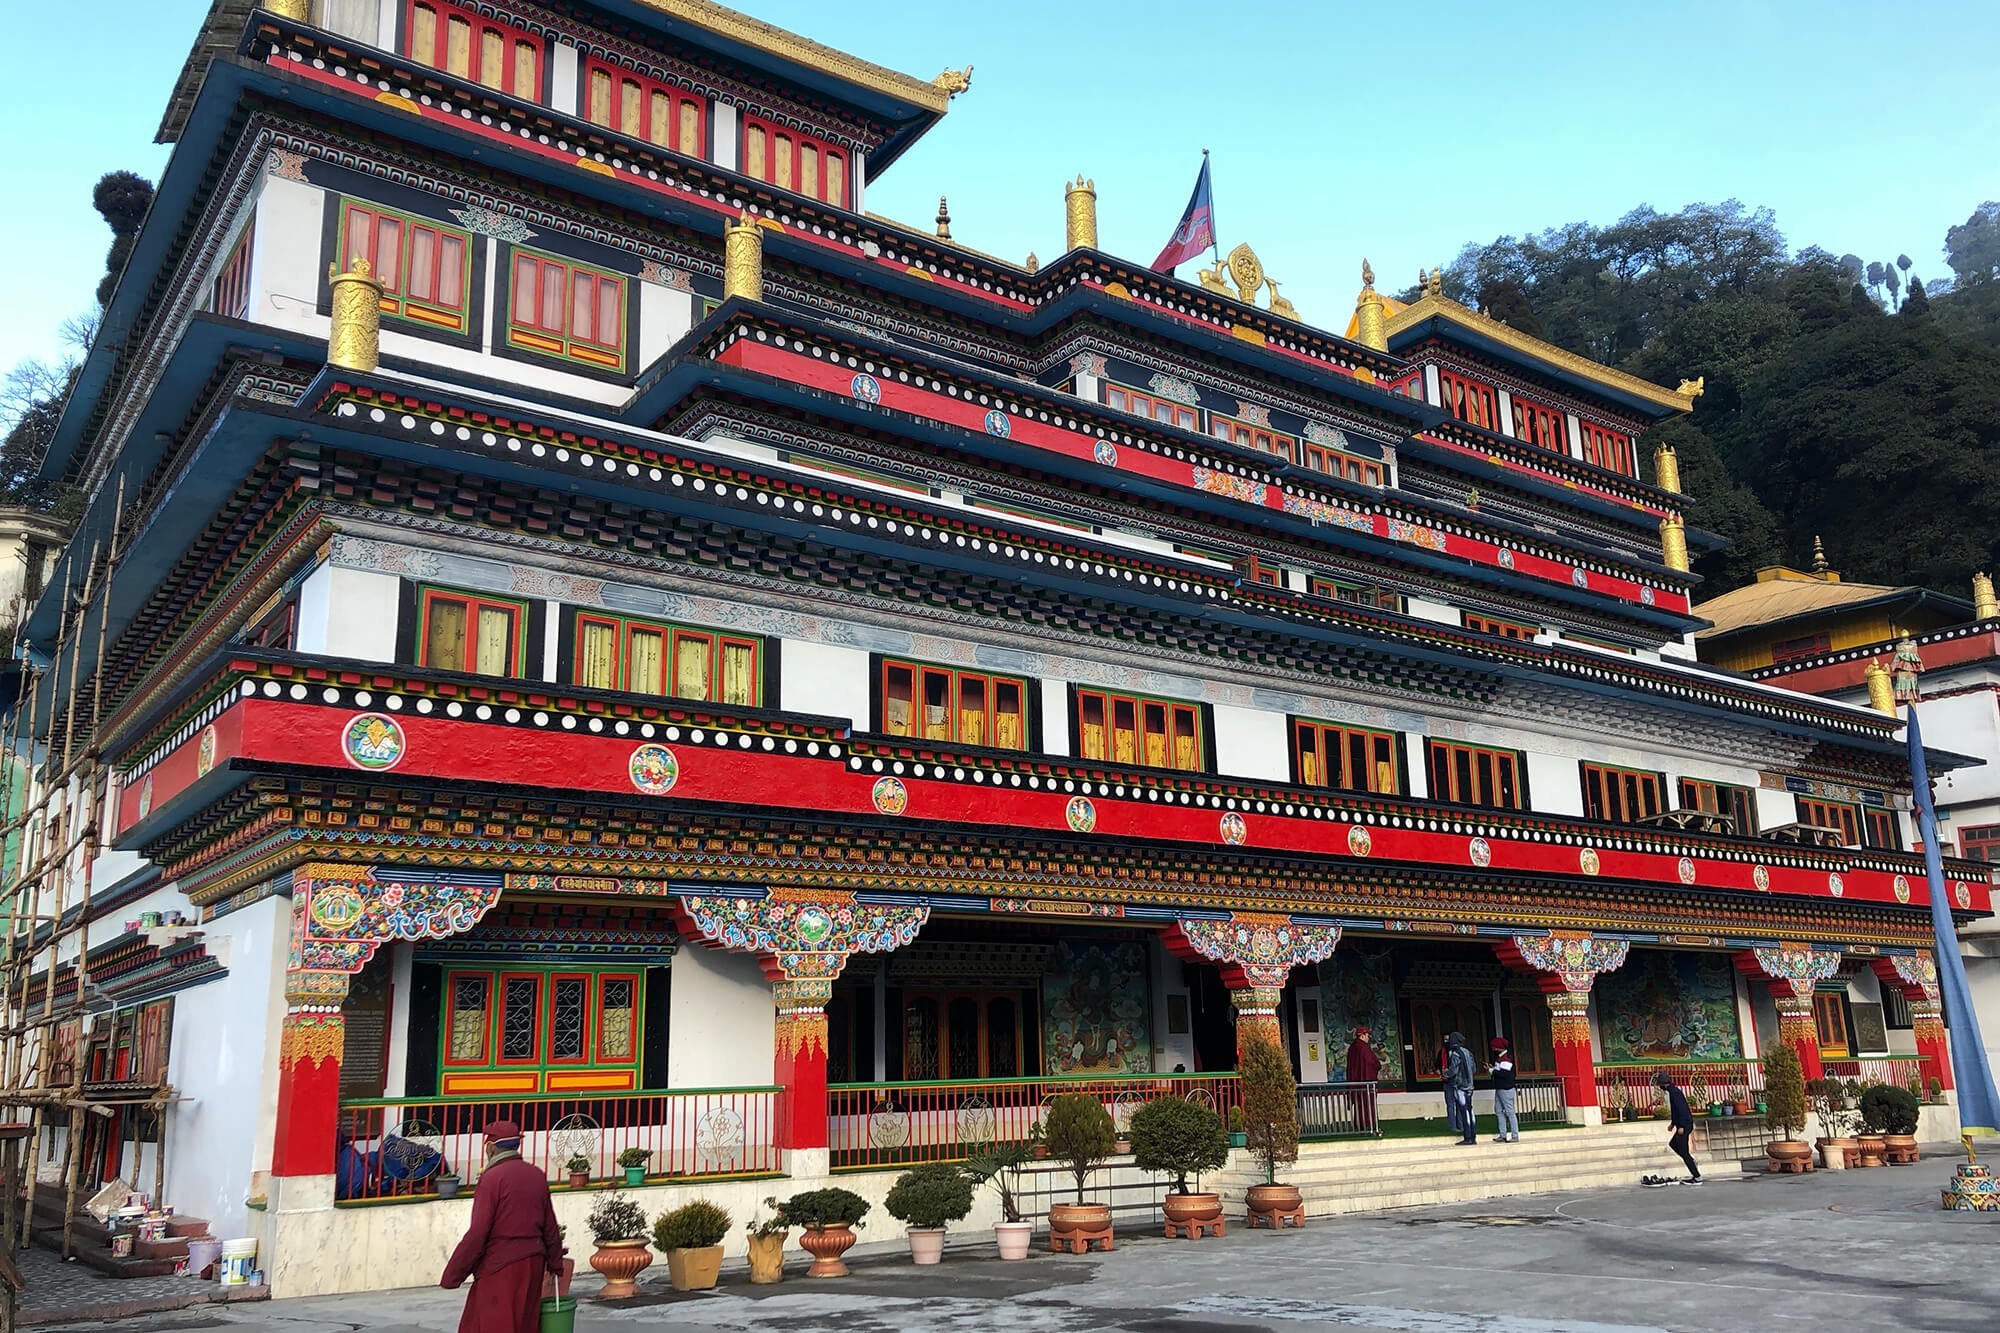 Thubtenchoeling Monastery